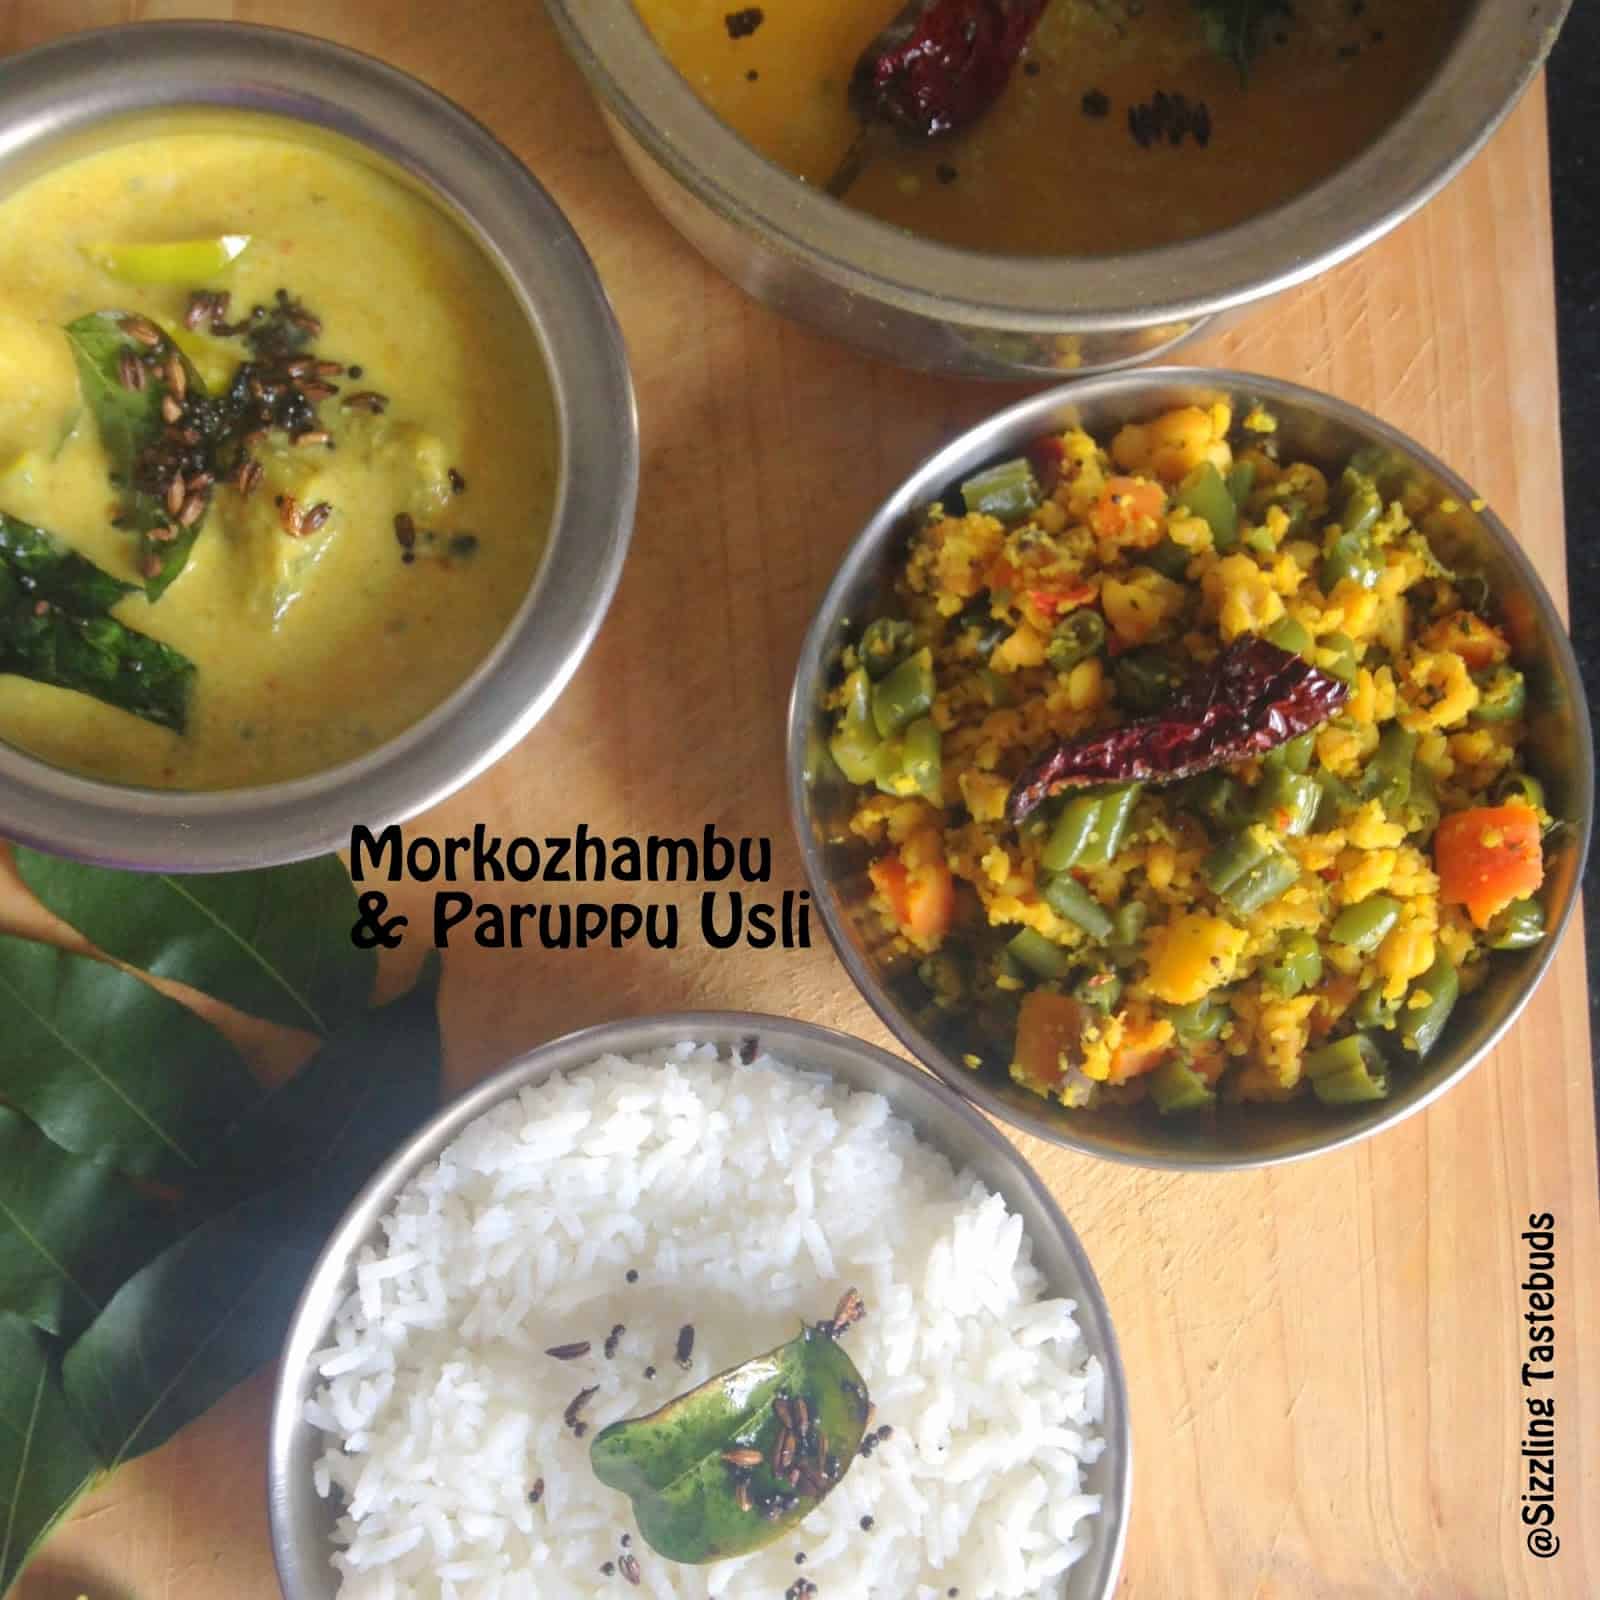 How to Make Paruppu Usli – Mor Kozhambu and Paruppu Usli | Combo Meals | Traditional Tamilnadu recipes